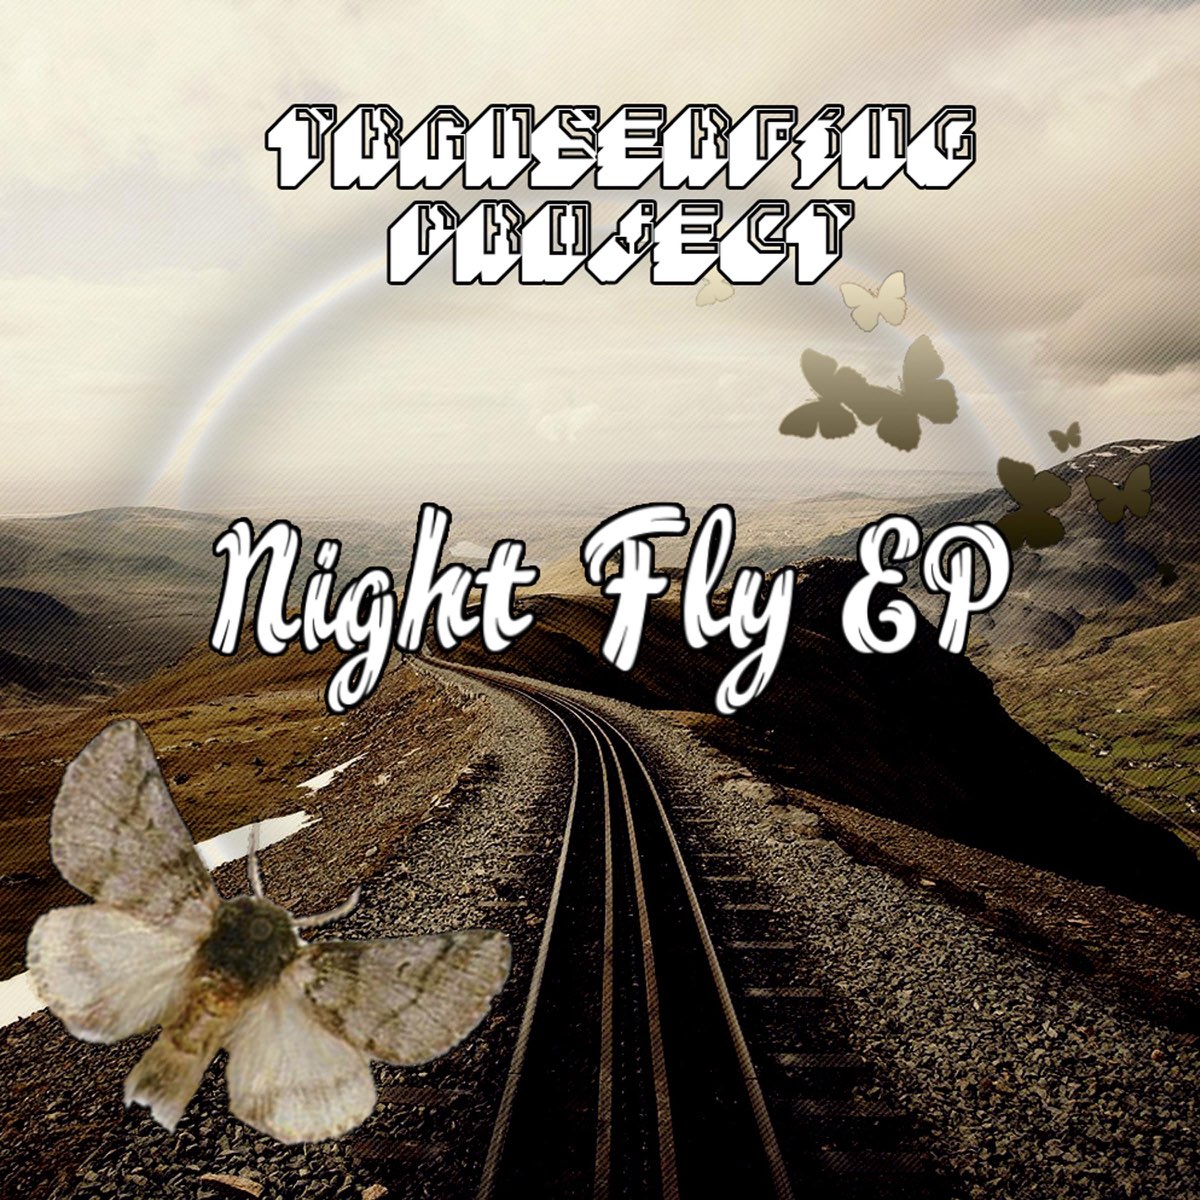 Night playlist. Project Night. Плейлист на ночь. Night Fly. Gysnoize - Flying.